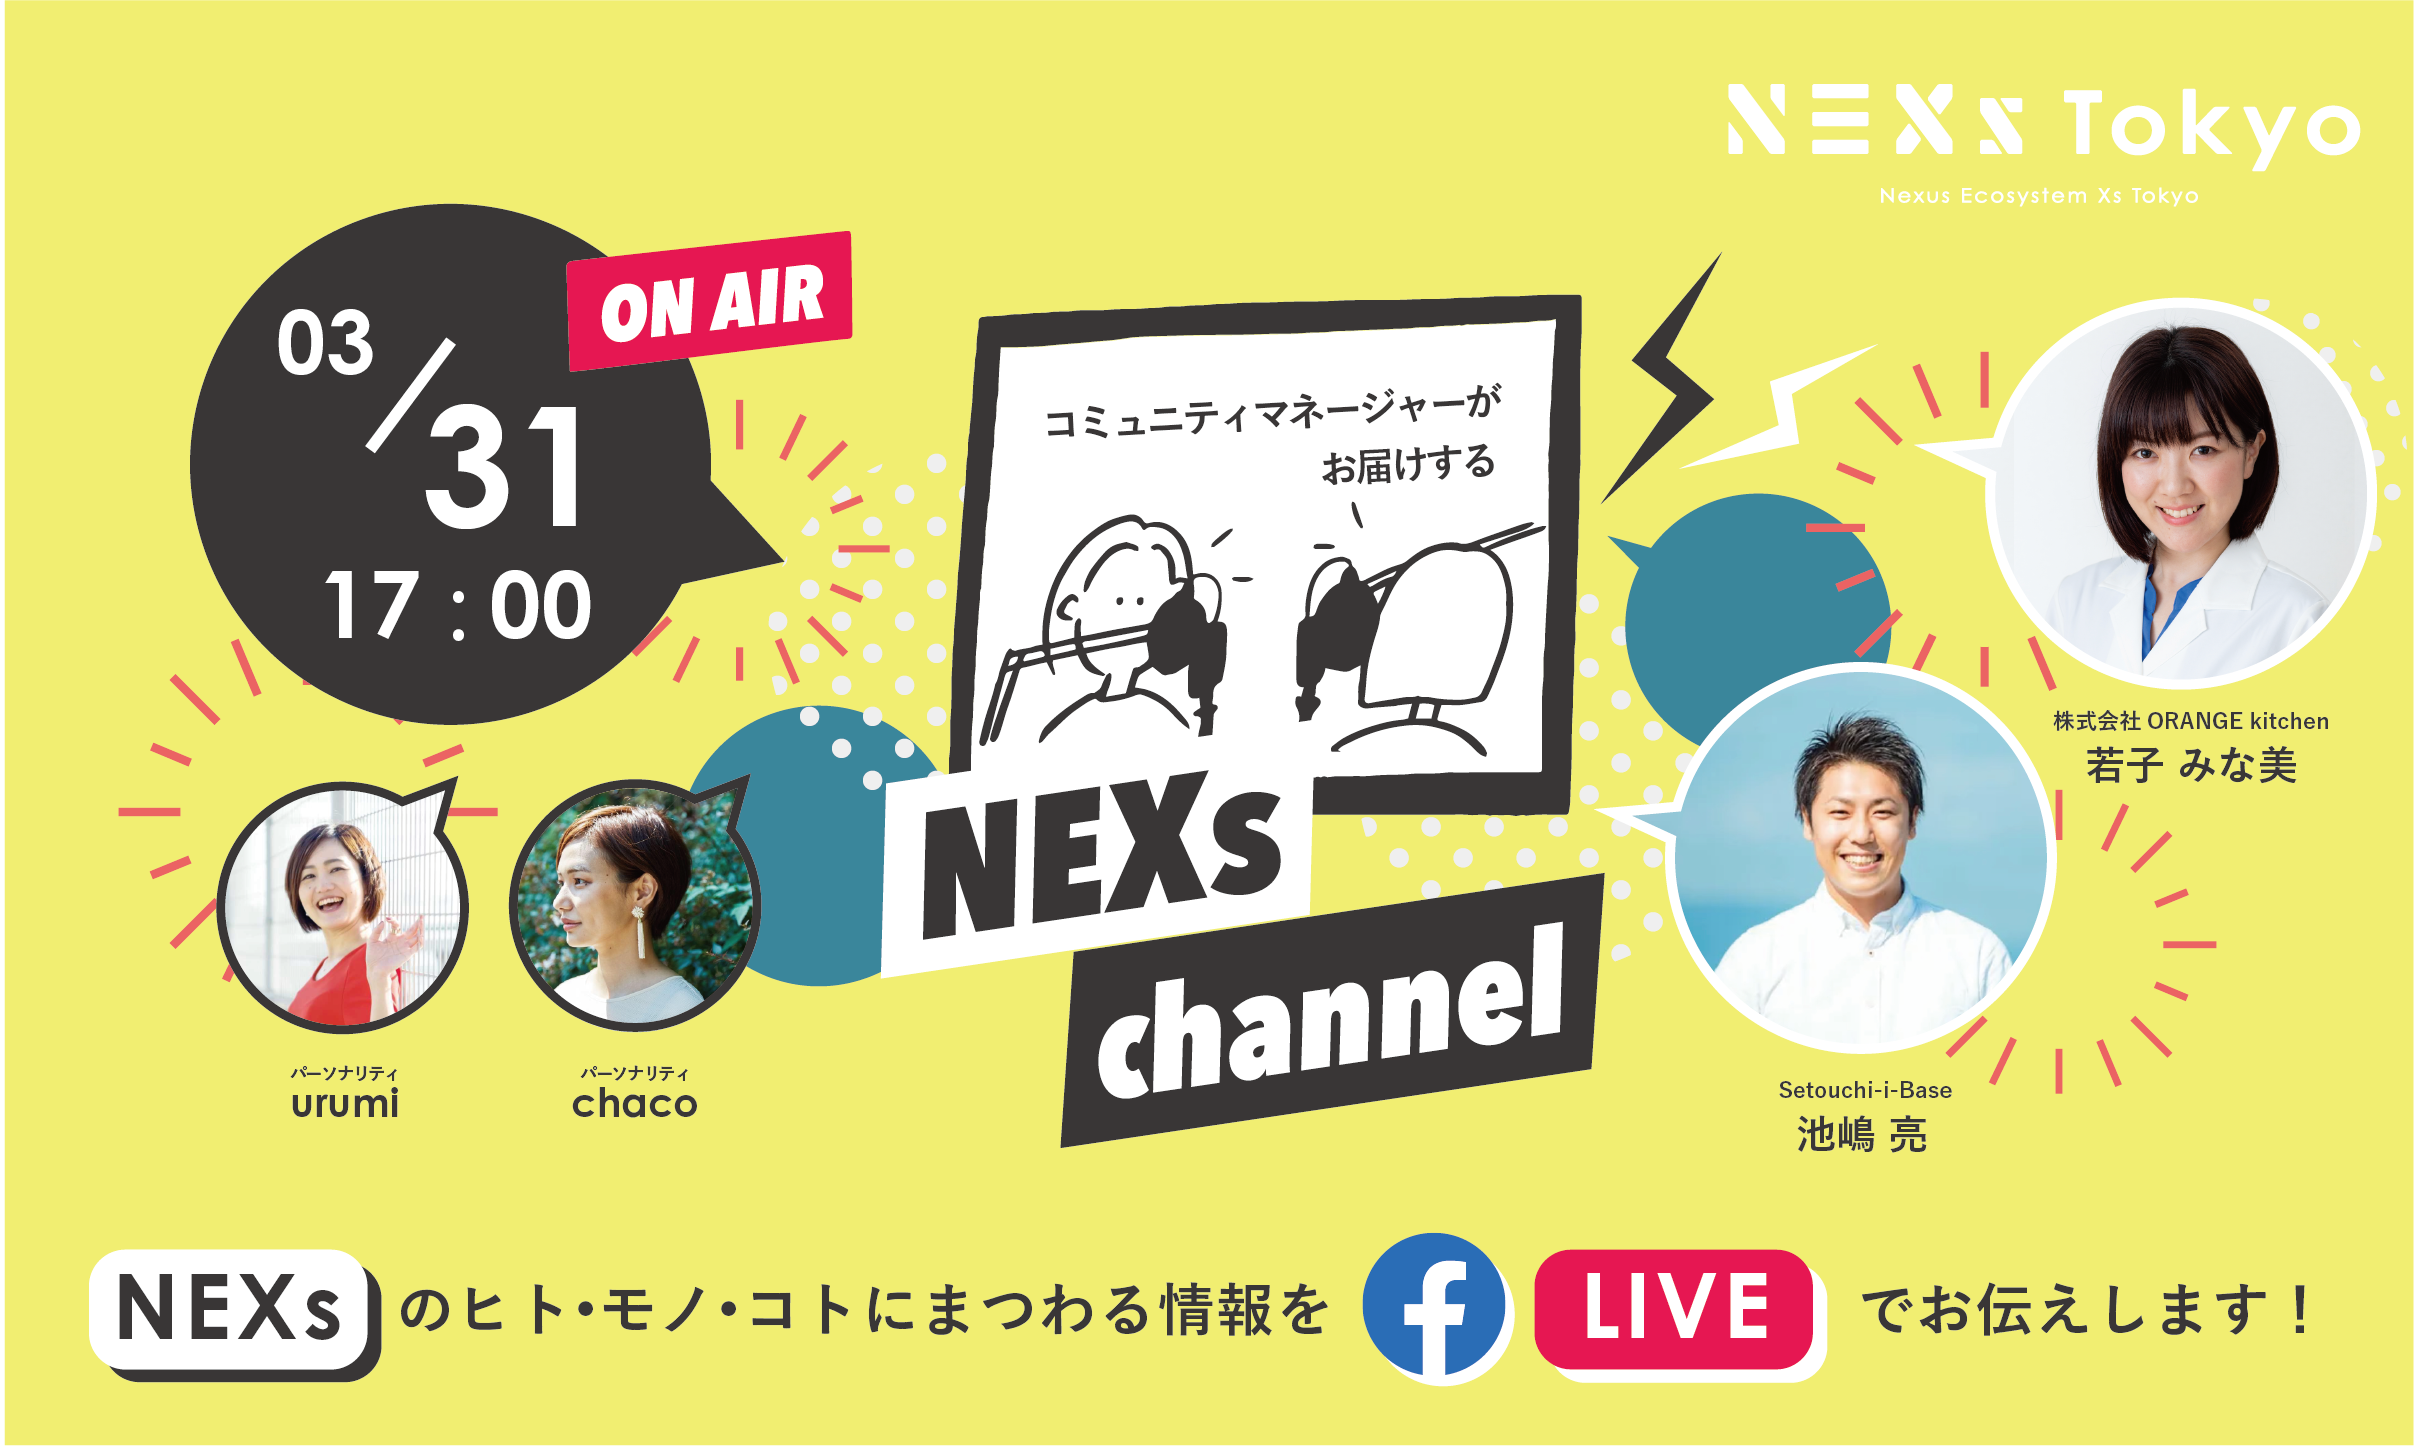 NEXs channel #15 -NEXs Tokyoのヒト・モノ・コトを特設ラジオブースから生放送でお届け！-